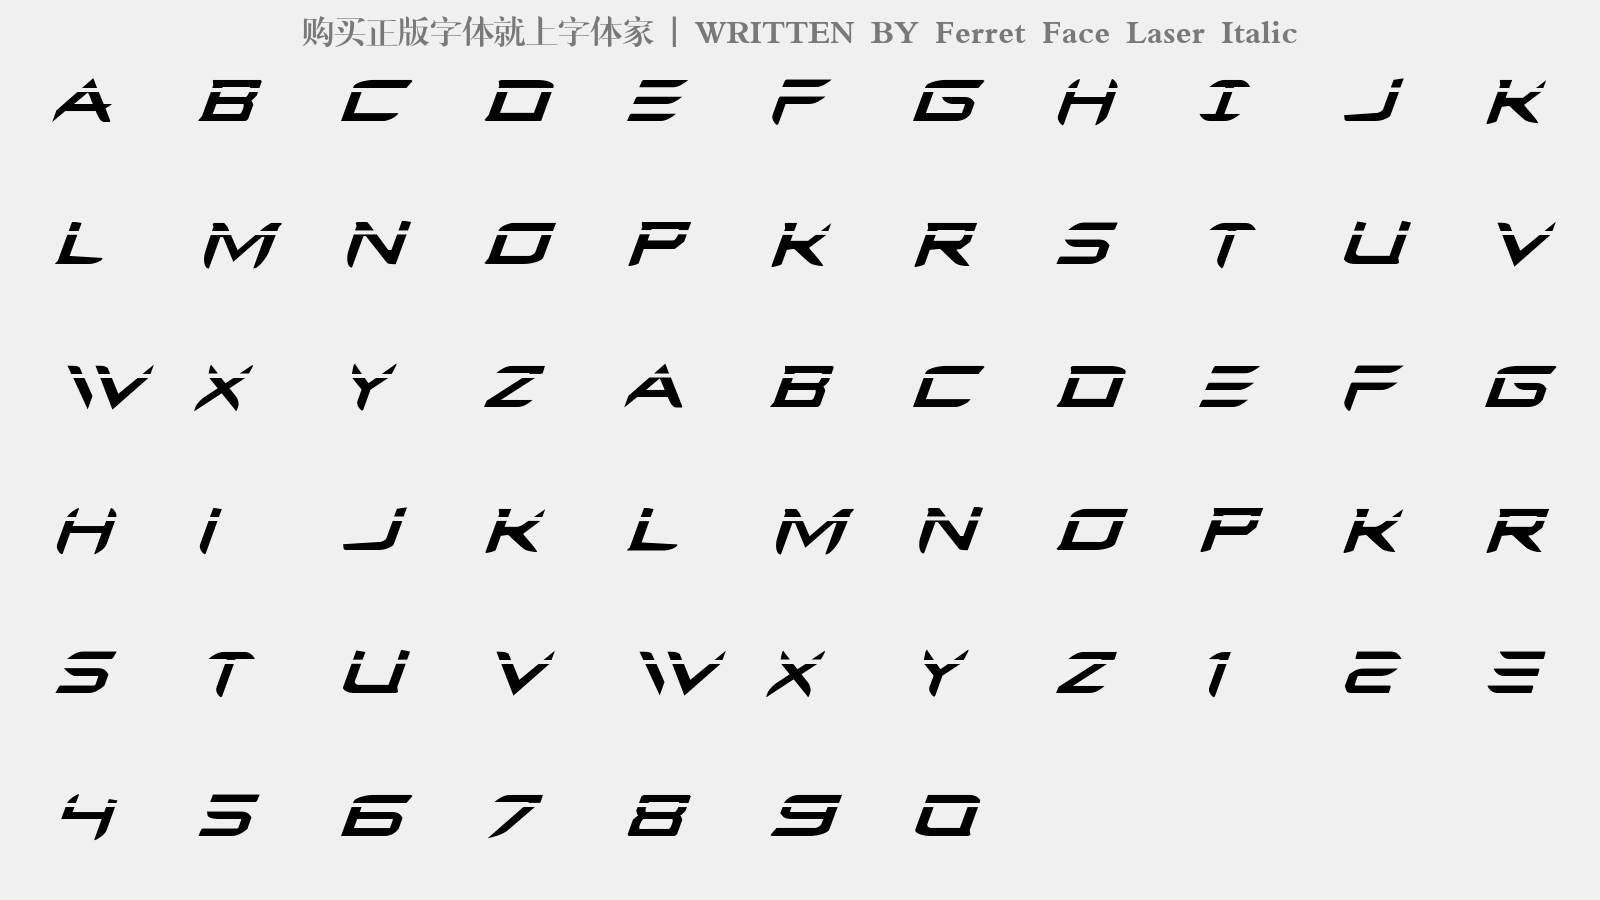 Ferret Face Laser Italic - 大写字母/小写字母/数字